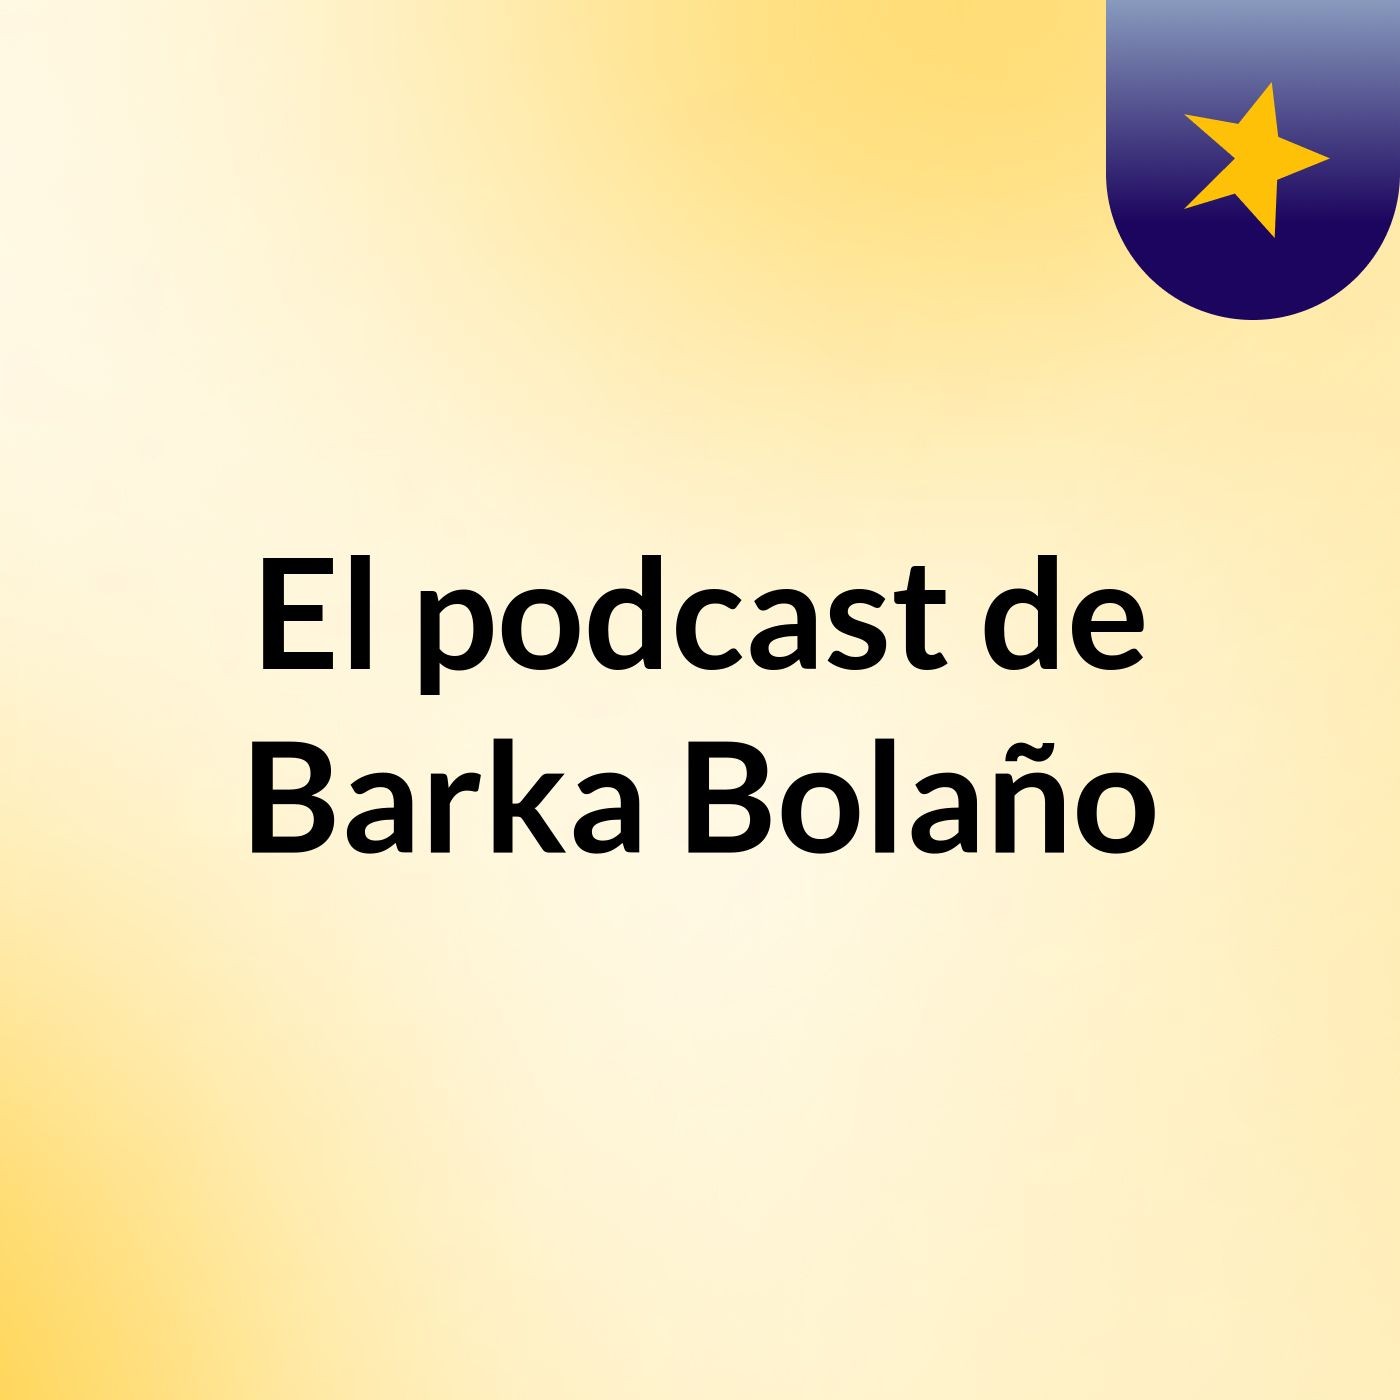 El podcast de Barka Bolaño